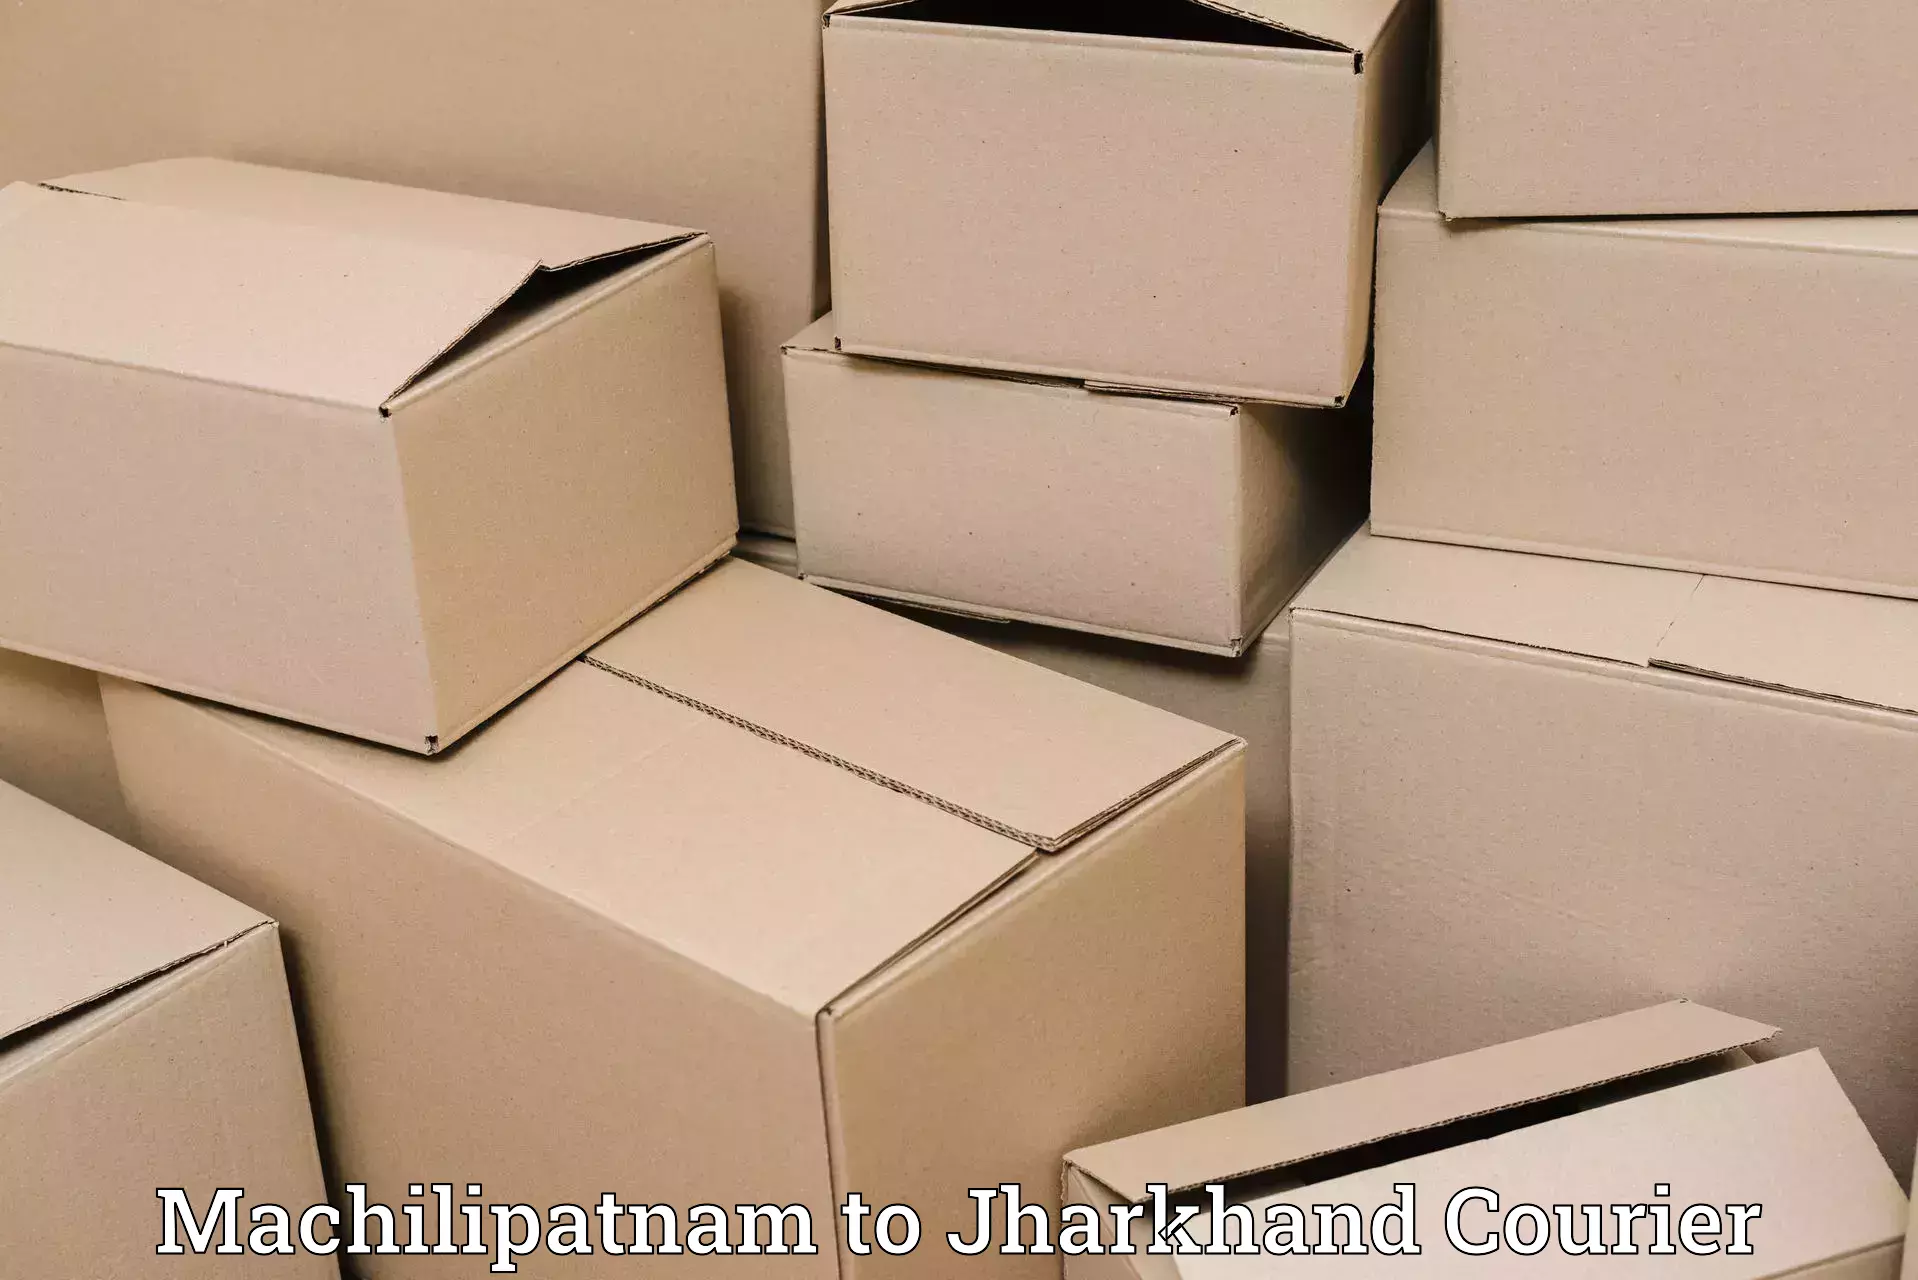 Logistics service provider Machilipatnam to Jharkhand